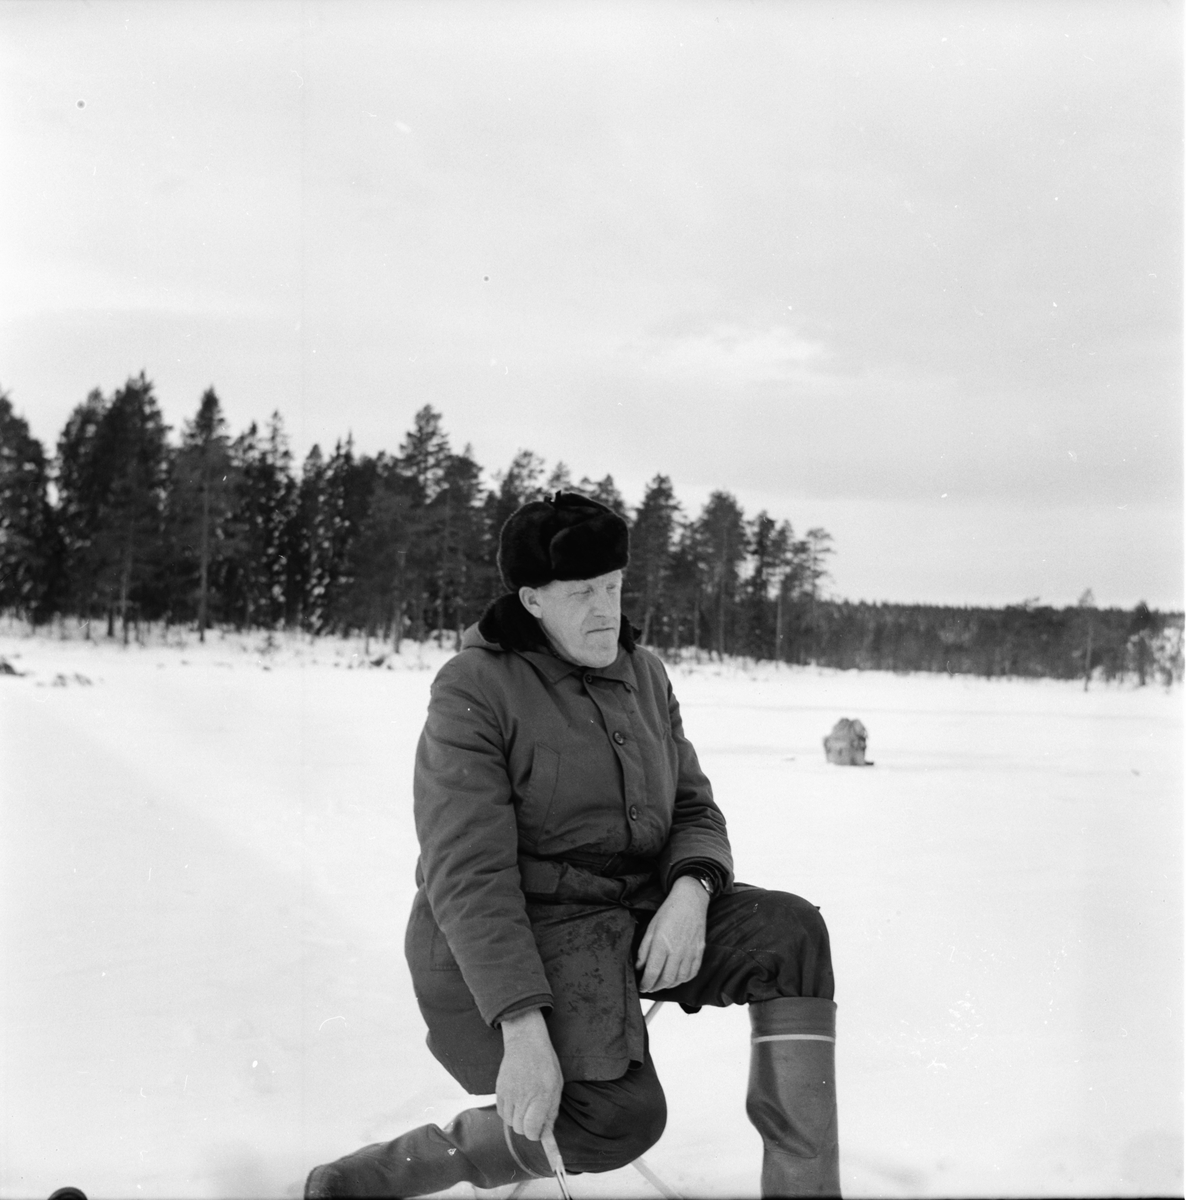 Fiske på Hälsen.
Johan Svärd
November 1973